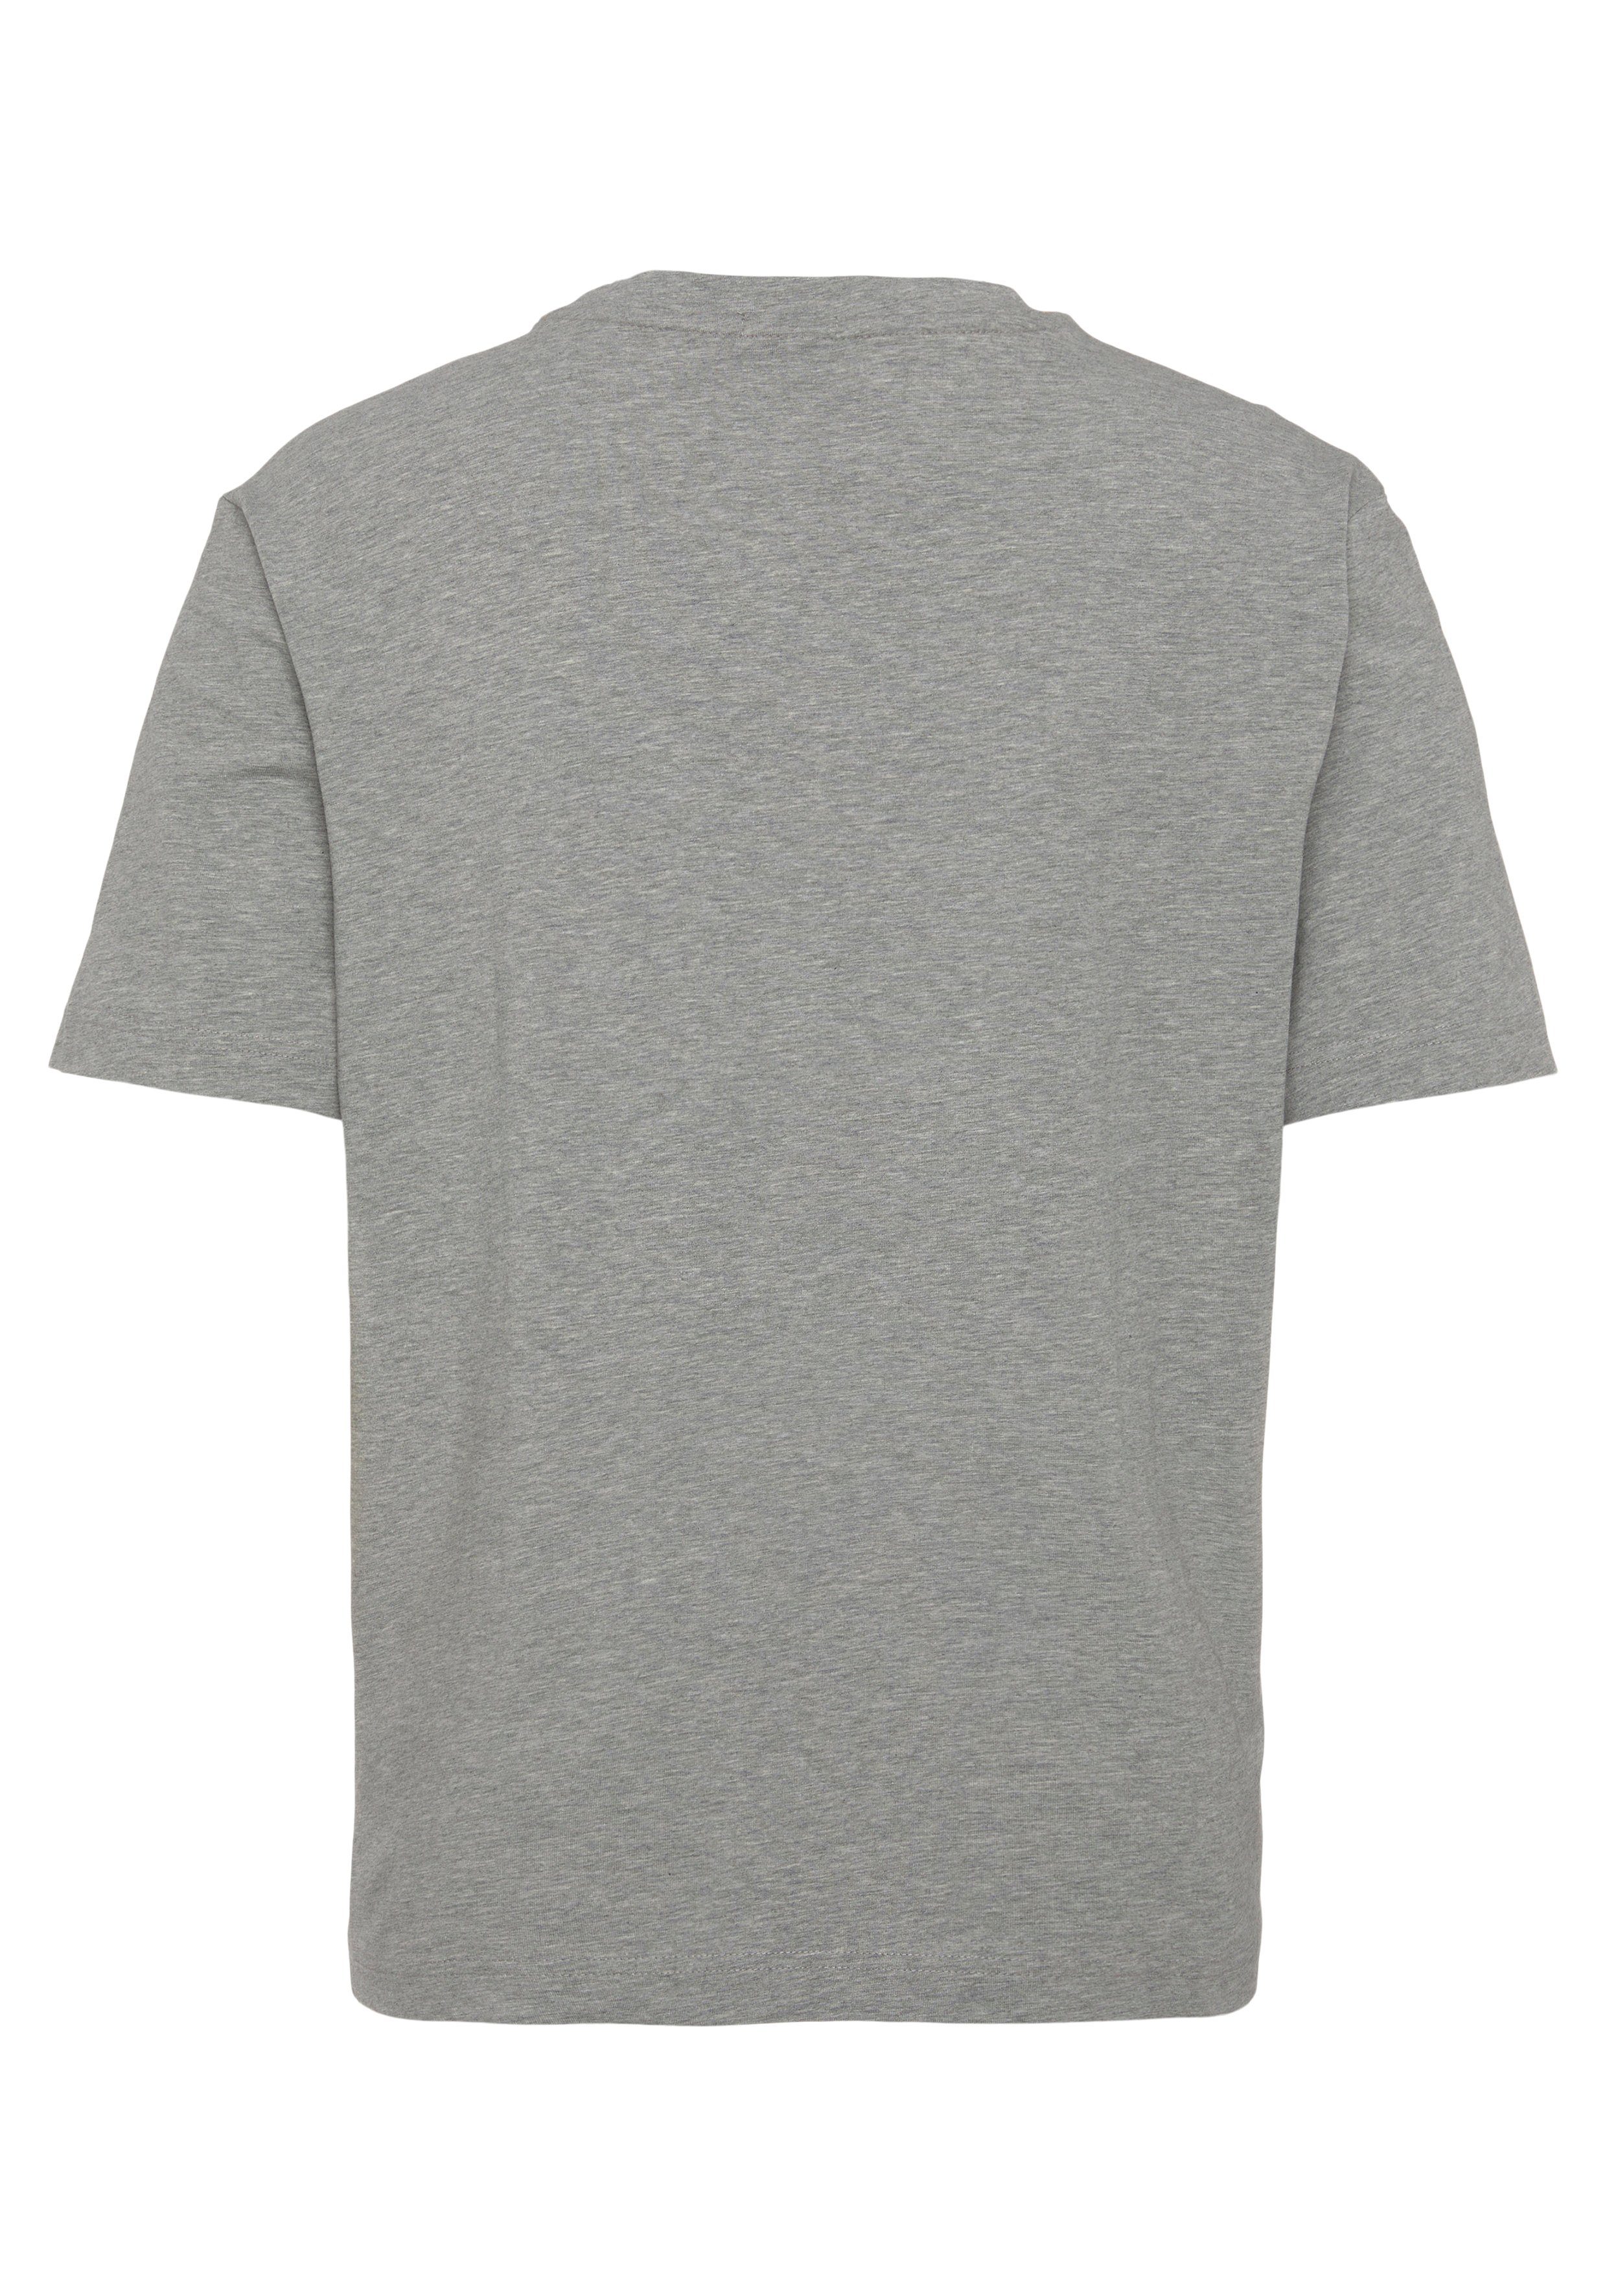 051 TChup Rundhalsausschnitt T-Shirt ORANGE mit BOSS Light/Pastel Grey